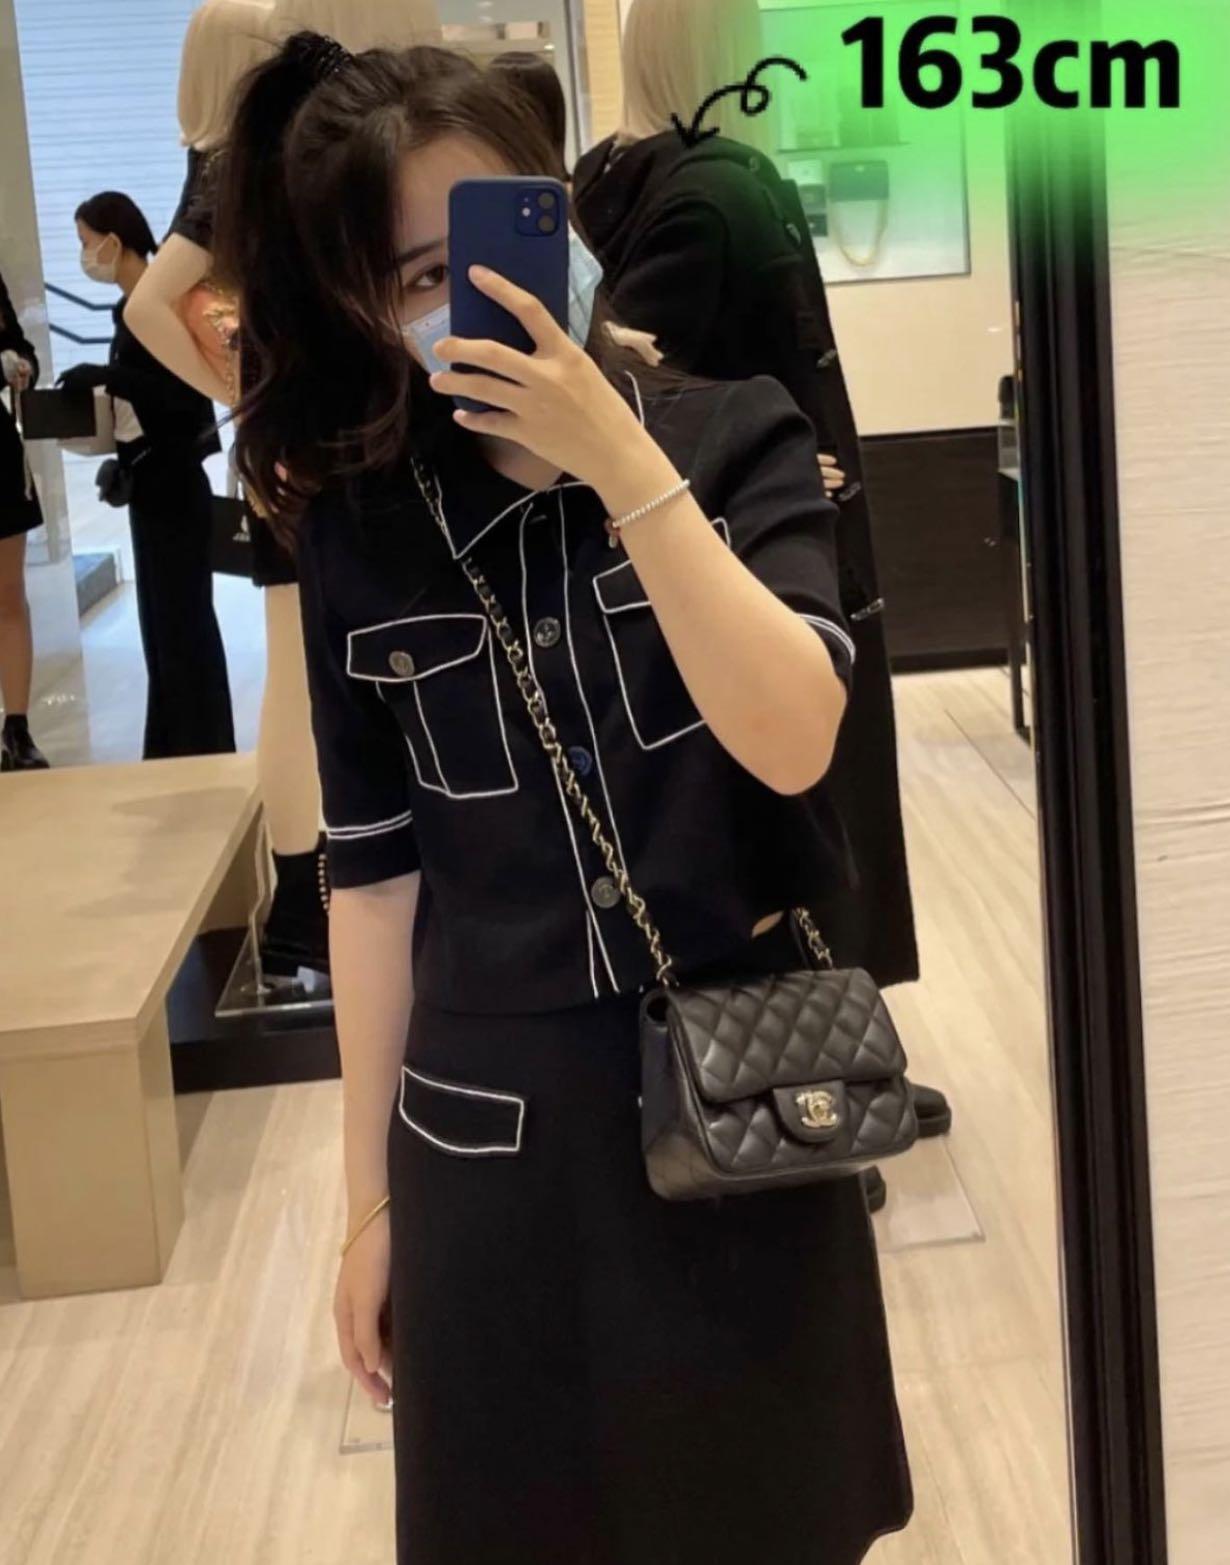 Chanel Mini Rectangular Flap Bag with Top Handle Dark Blue